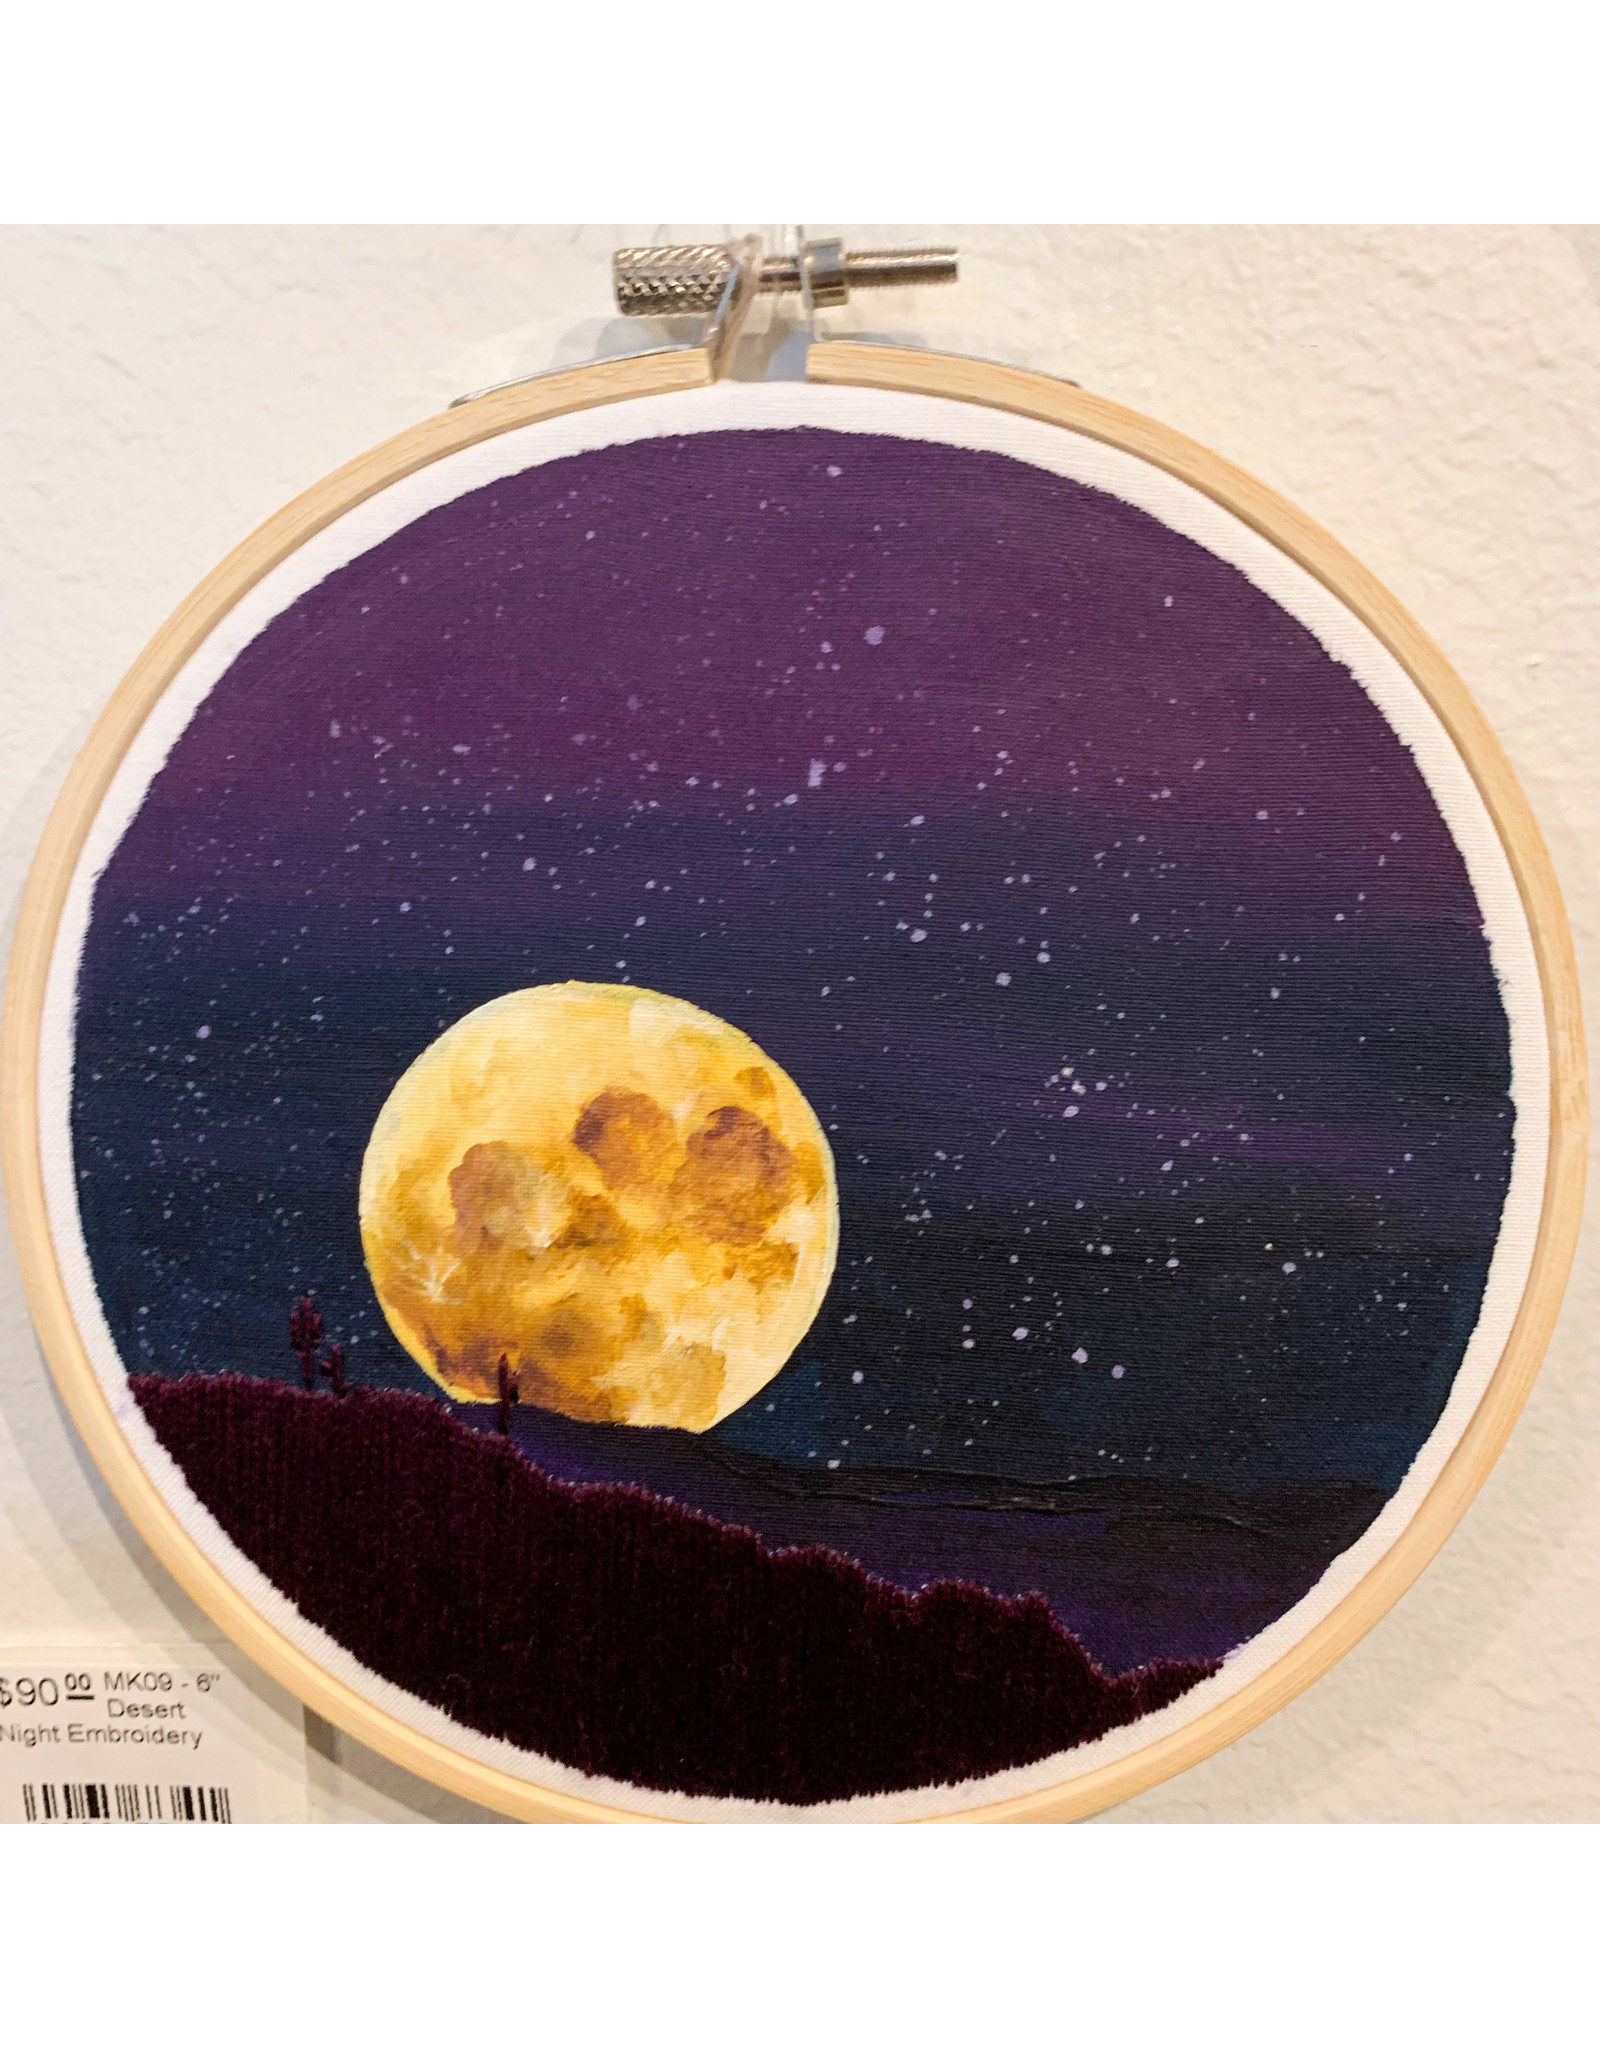 MK09 - 6" Desert Night Embroidery